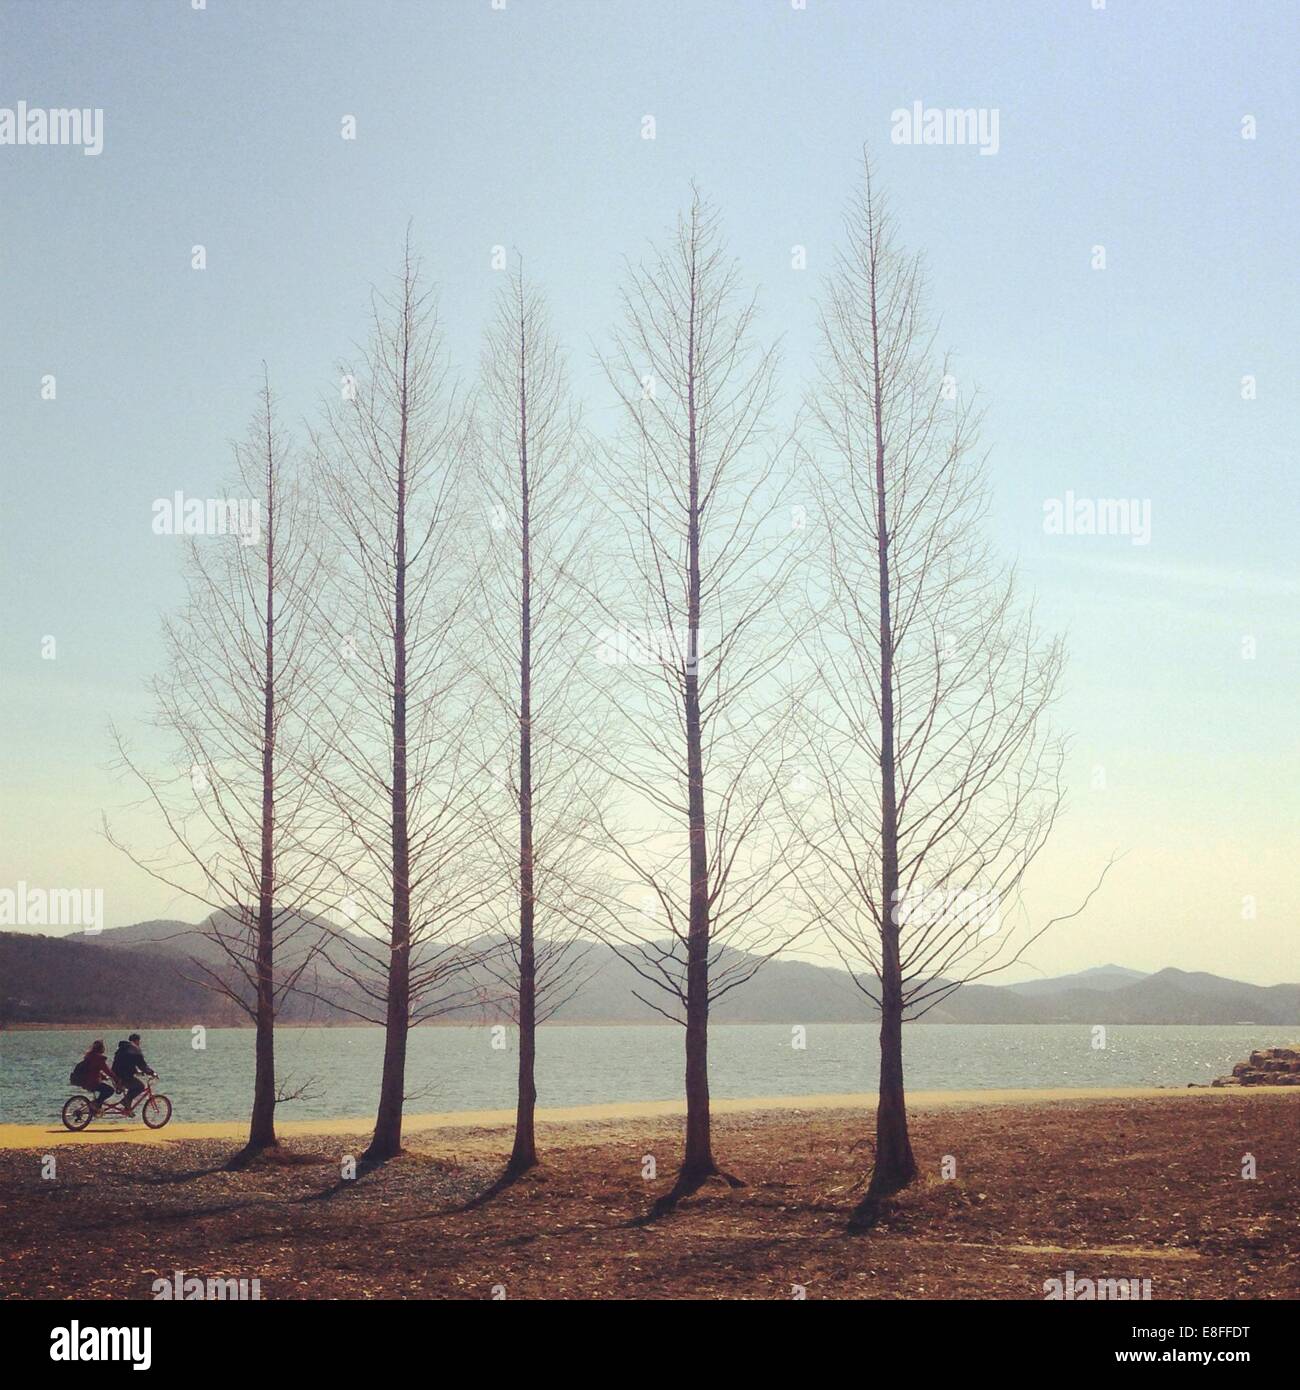 Couple cycling past a row of trees, South Korea Stock Photo